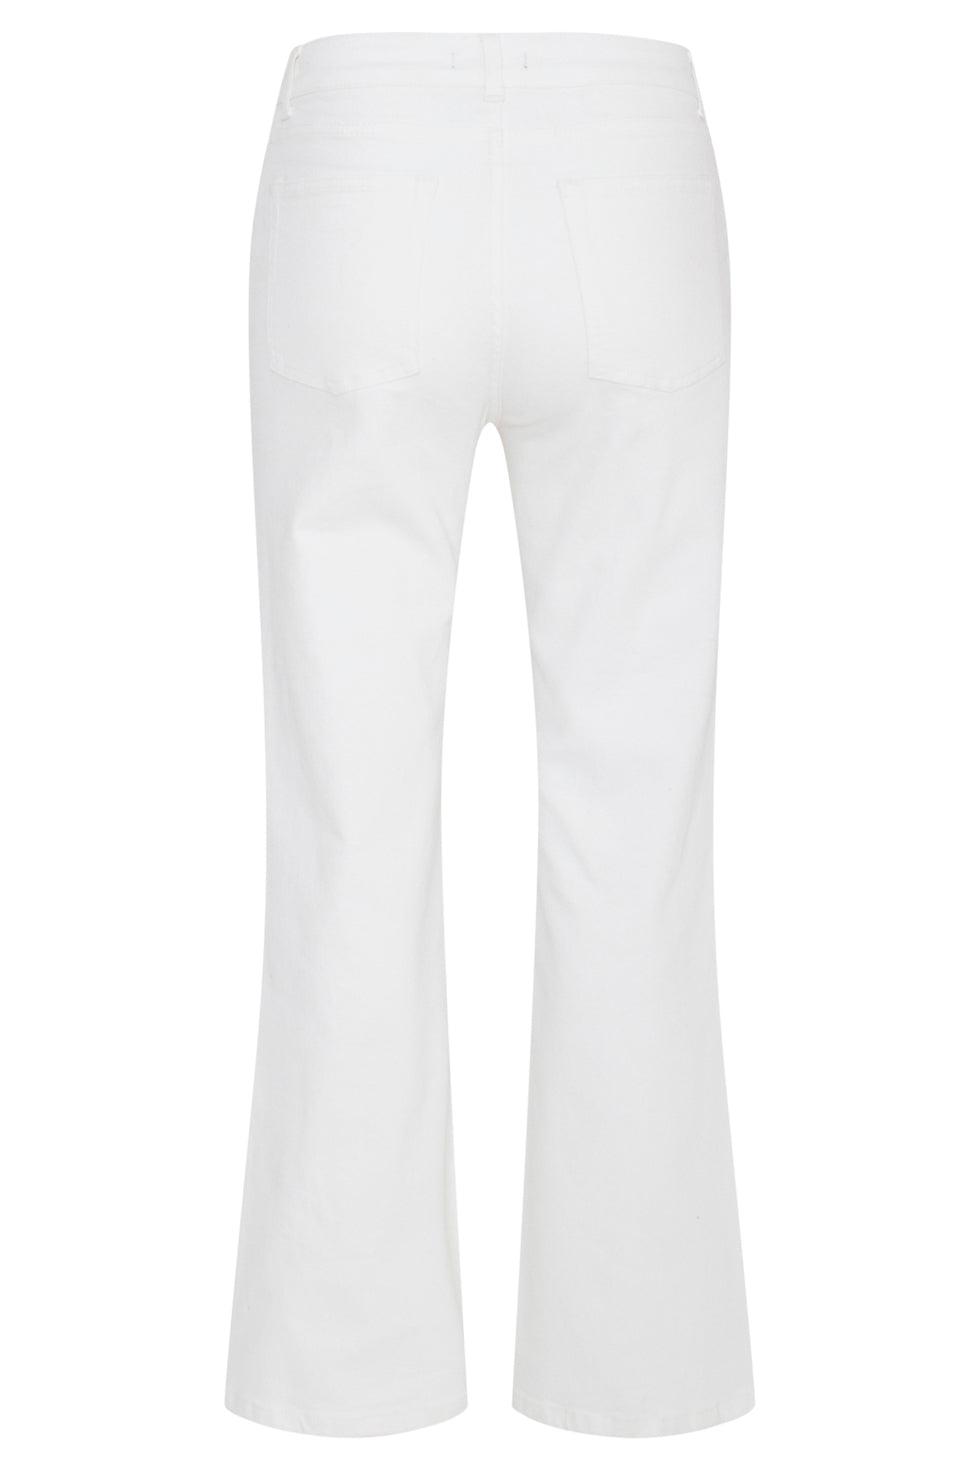 23171-000 Hoge Taille Witte Rechte Jeans Broek